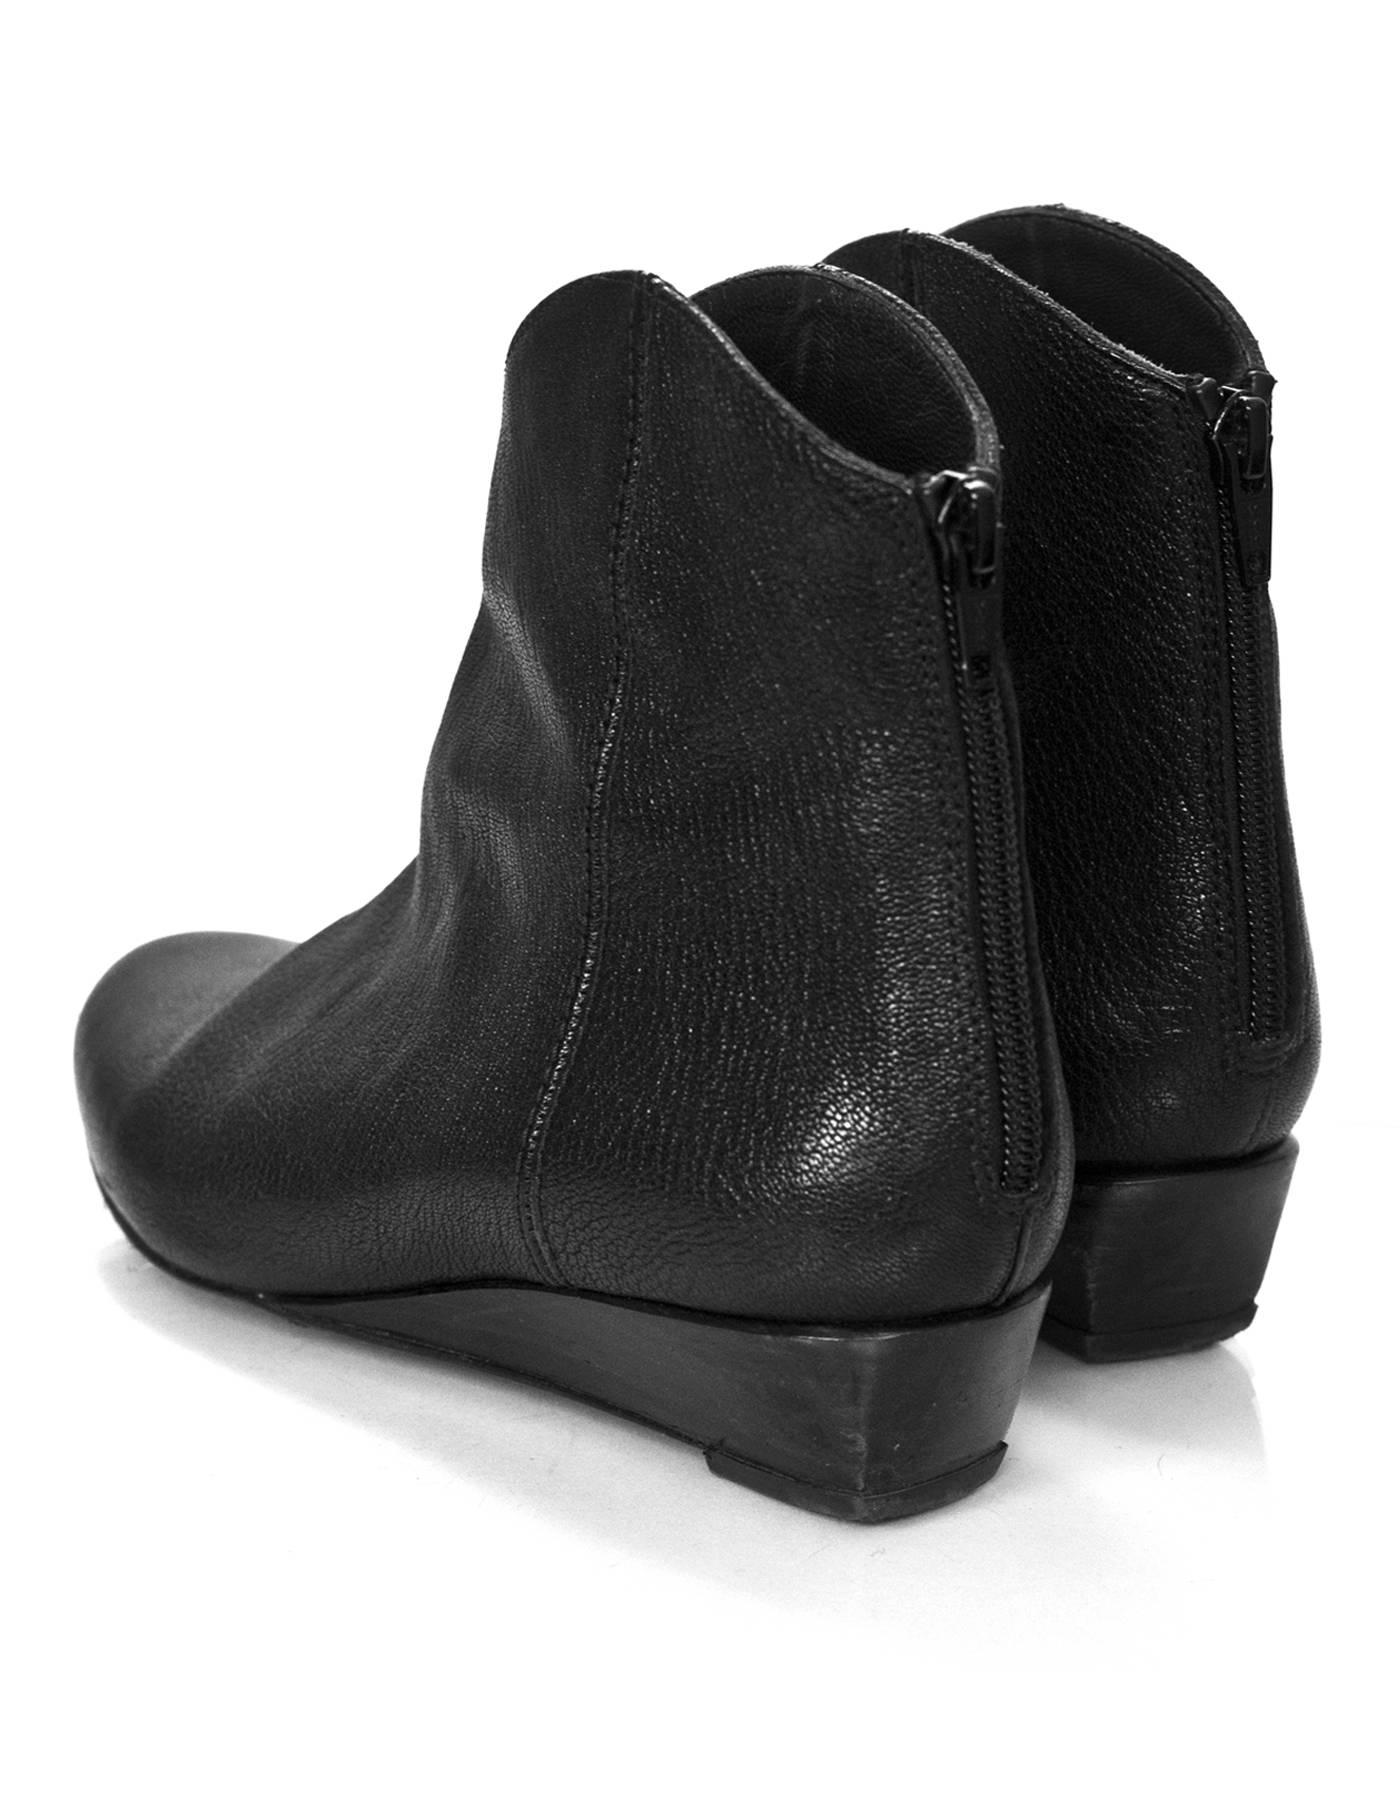 Women's Stuart Weitzman Black Leather Ankle Boots Sz 6